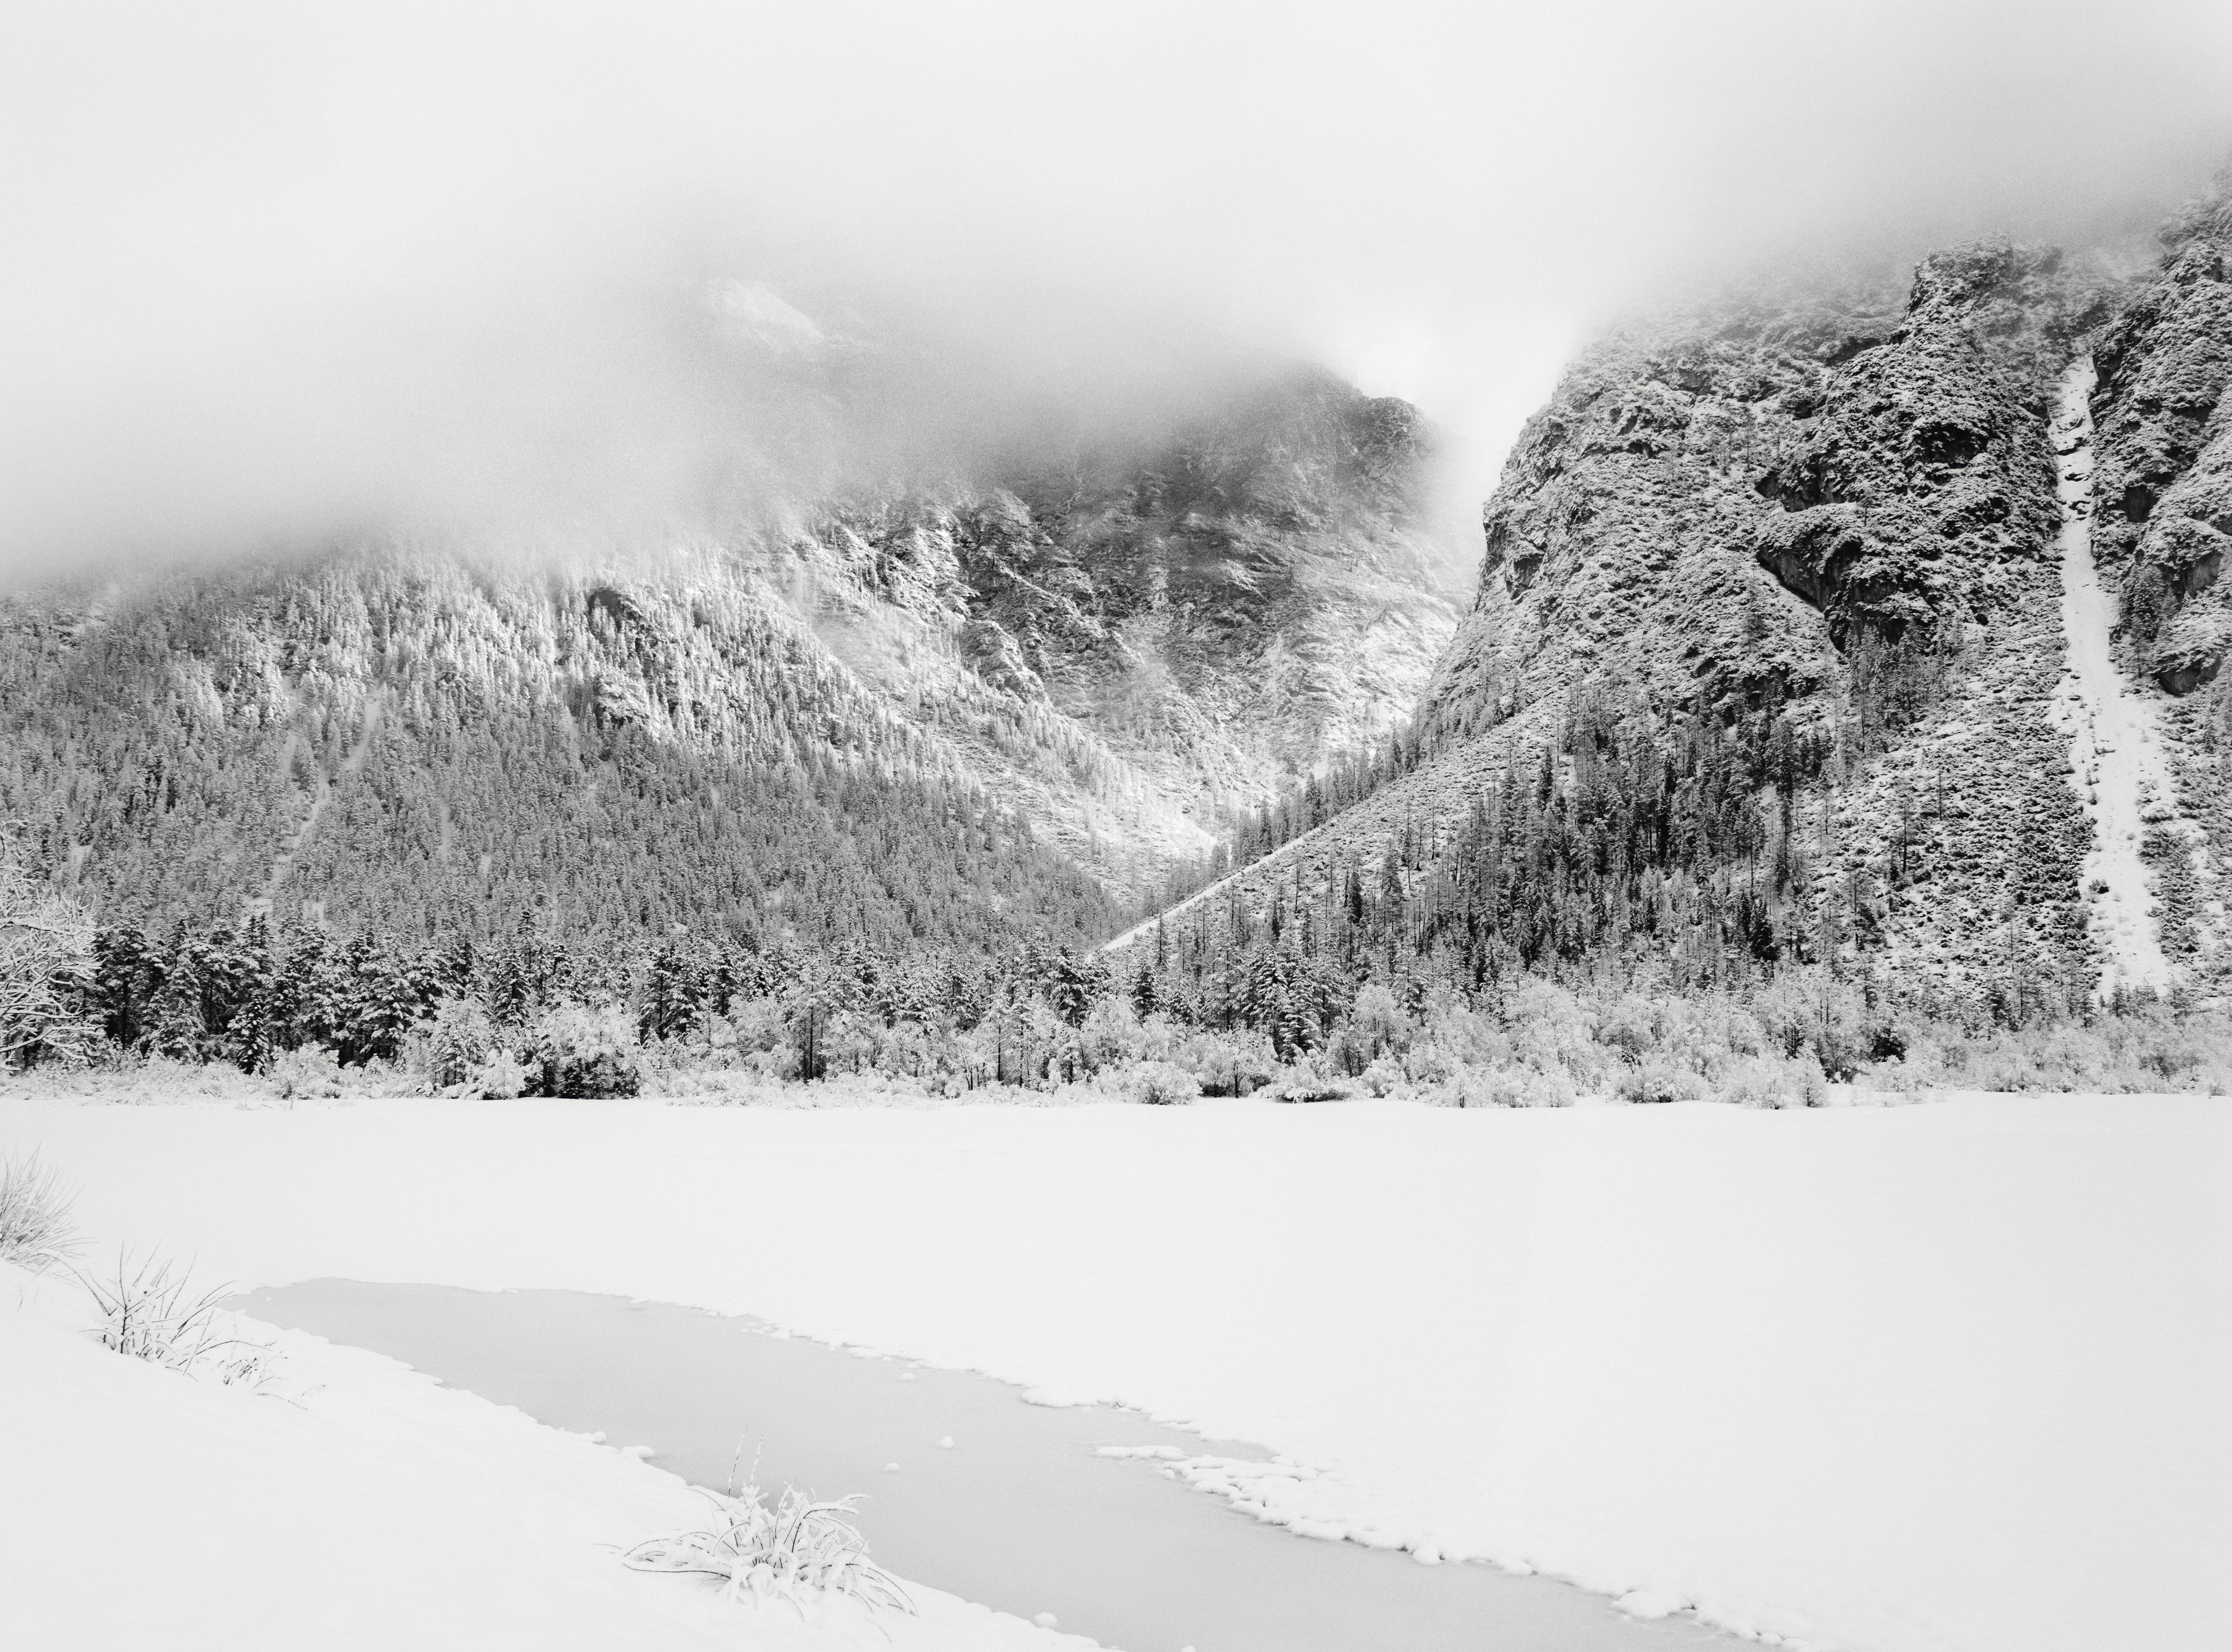 Ugne Pouwell Landscape Photograph – Cortina D'Ampezzo Nr.2 - Analogue Schwarz-Weiß-Landschaftsfotografie, Ltd. 10